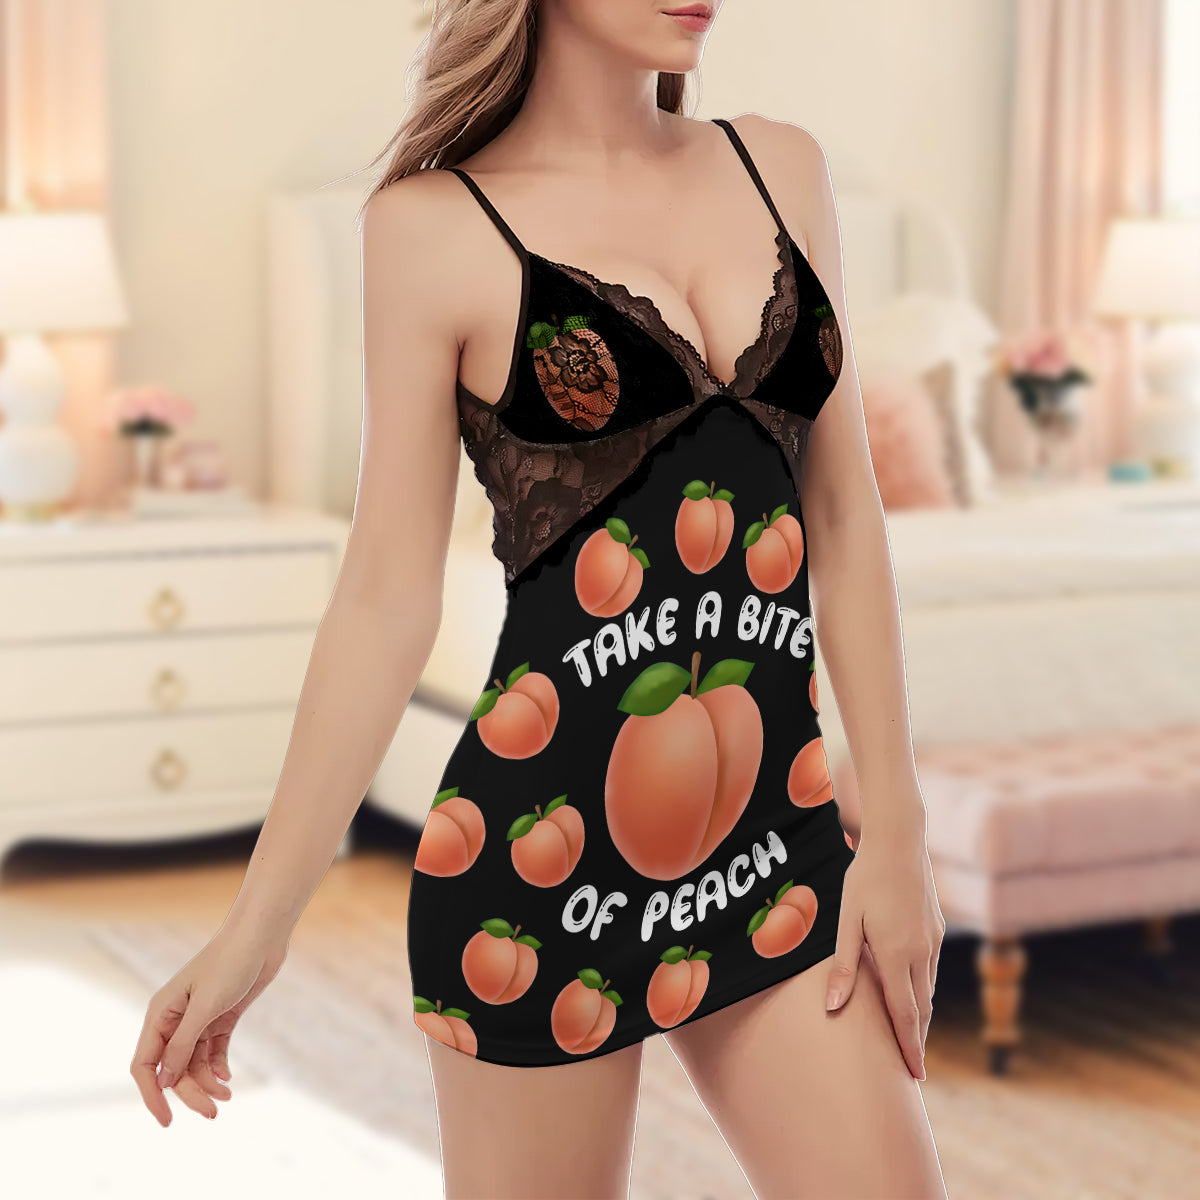 Take A Bite Of Peach - Black Cami Dress